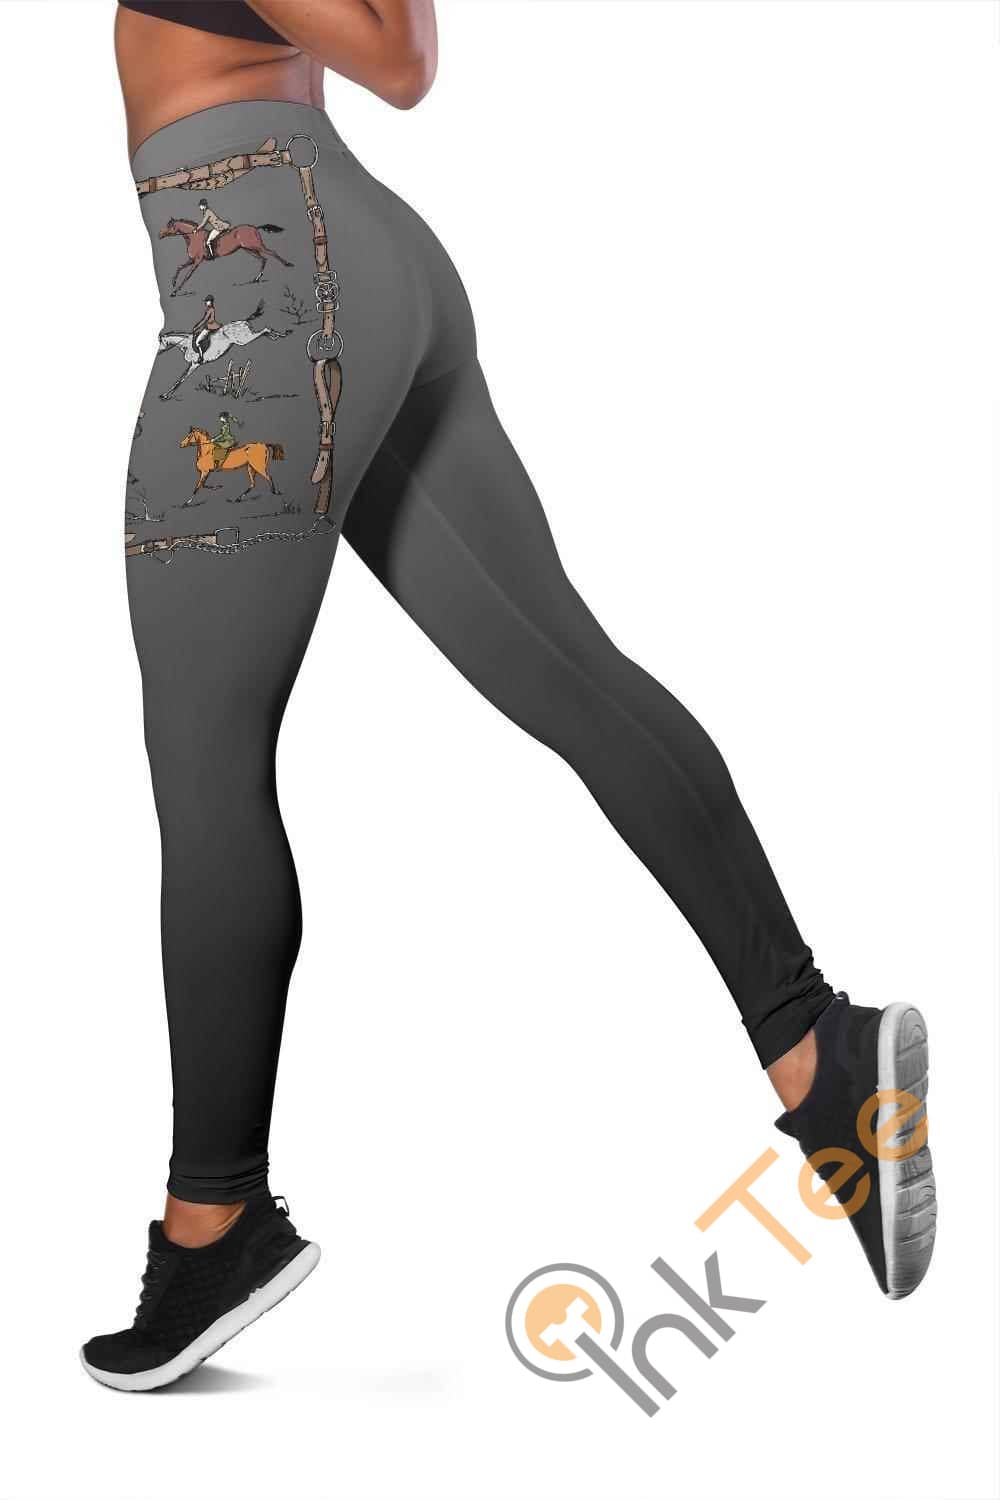 Inktee Store - Eventing Horse 3D All Over Print For Yoga Fitness Women'S Leggings Image